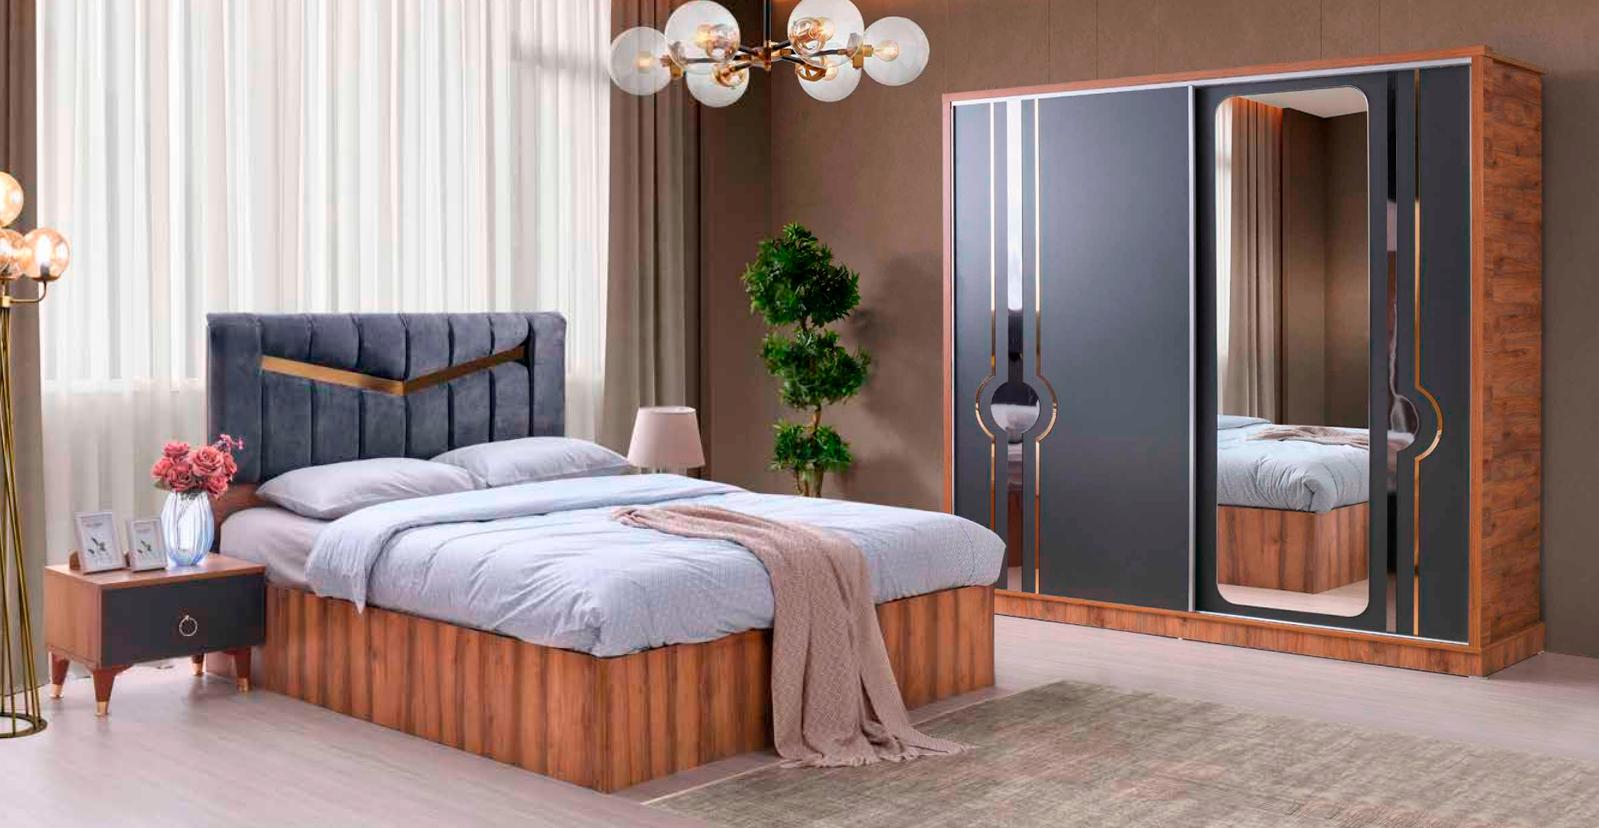 Bedroom set 4-piece bed bedside tables wardrobe two tone grey brown